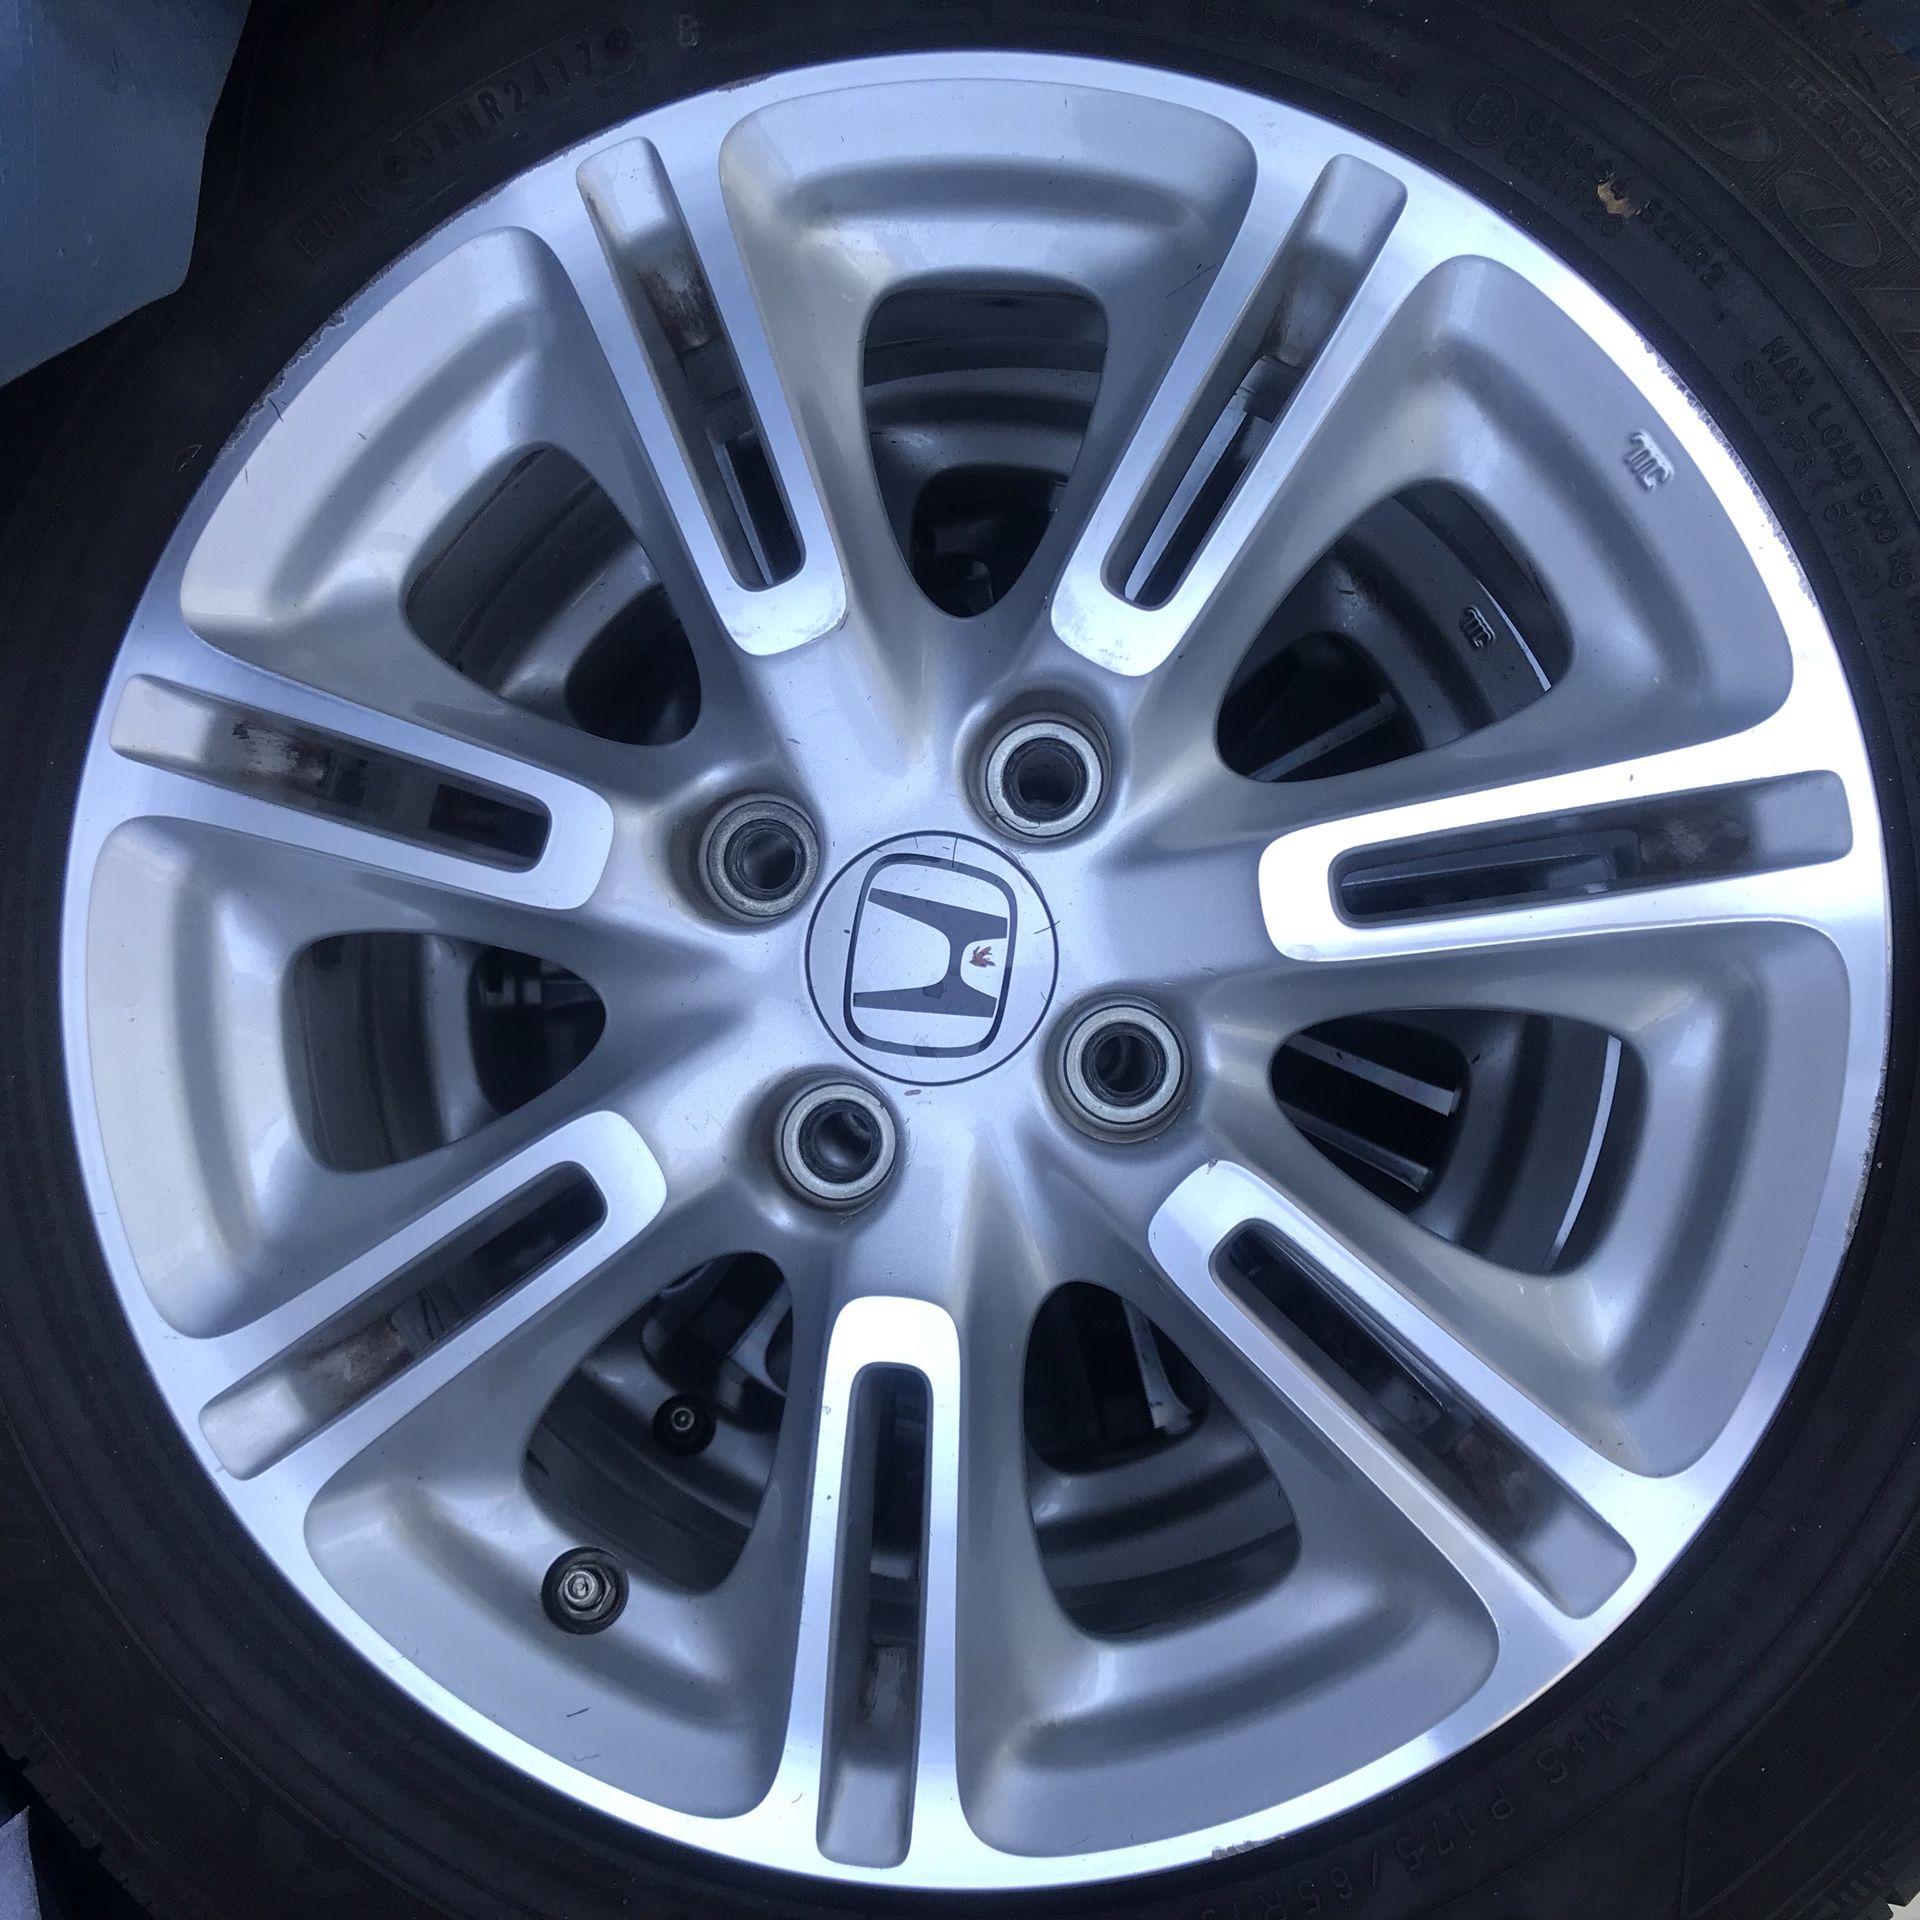 2011 Honda Insight OEM wheels and tires (4)